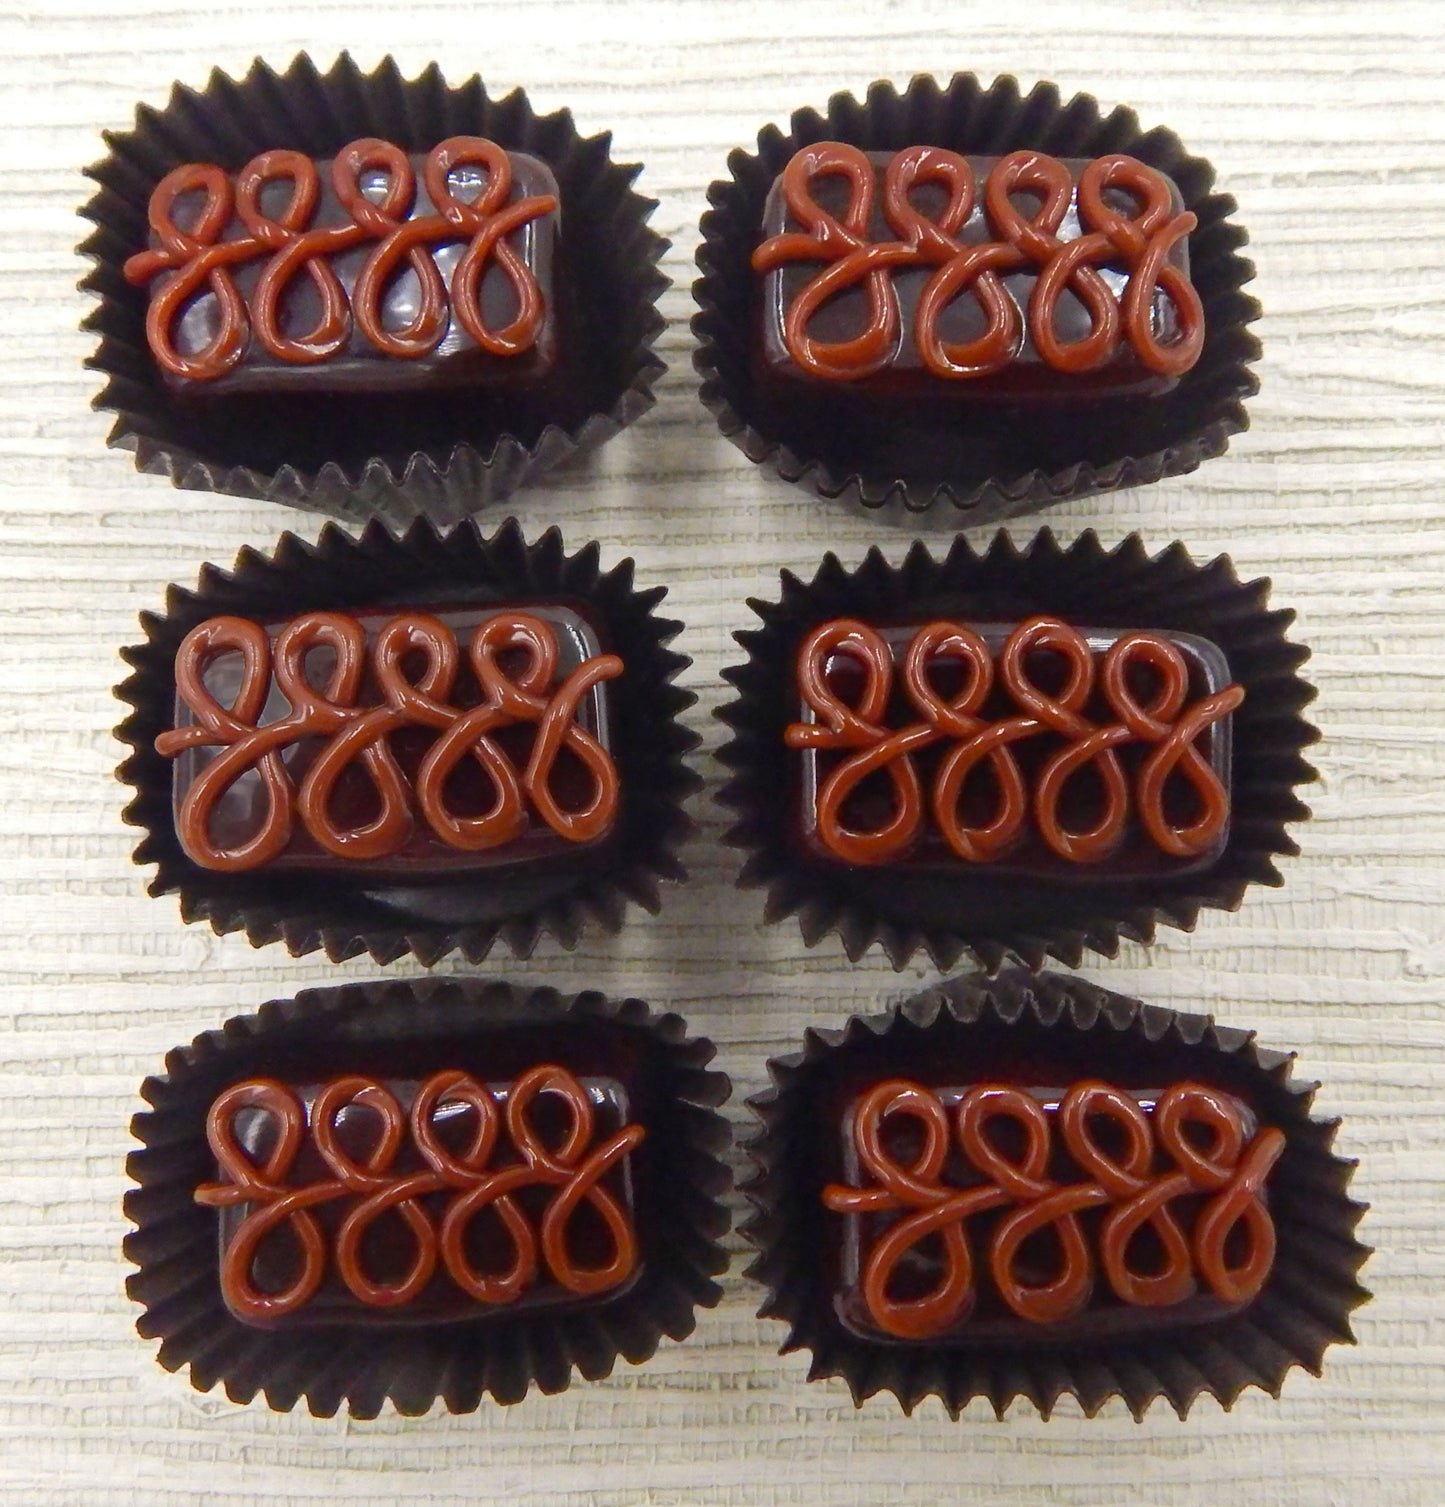 Chocolate Treat with Caramel Scroll Design (16-033CA)